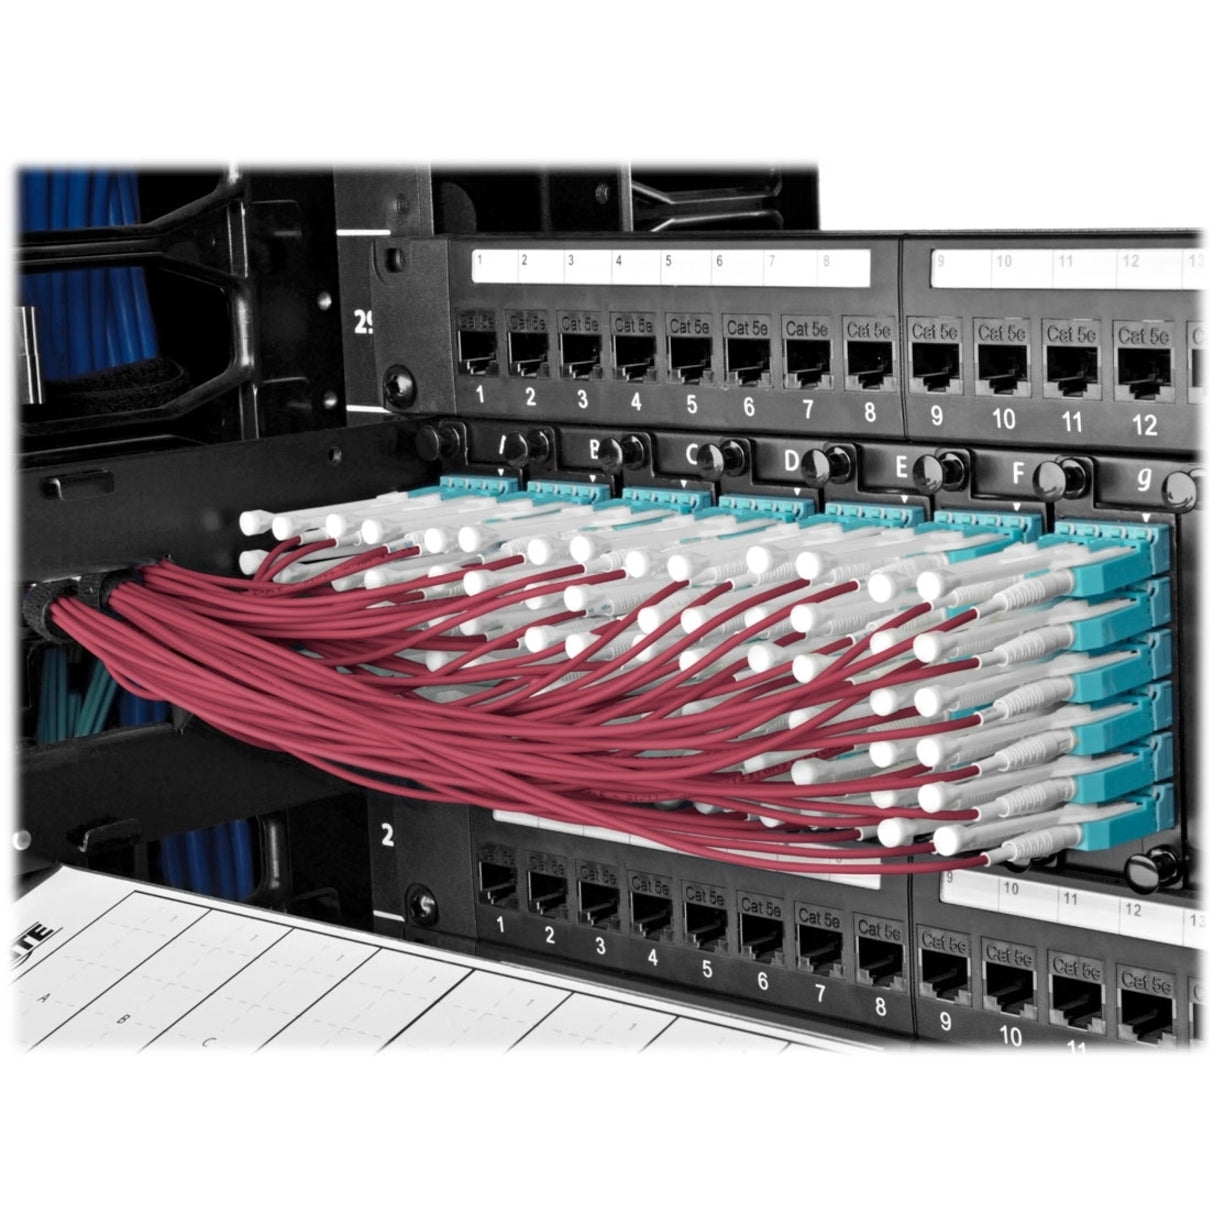 Tripp Lite N821-02M-MG-T Fiber Optic Network Cable, 6.60 ft, Multi-mode, 100 Gbit/s, Magenta